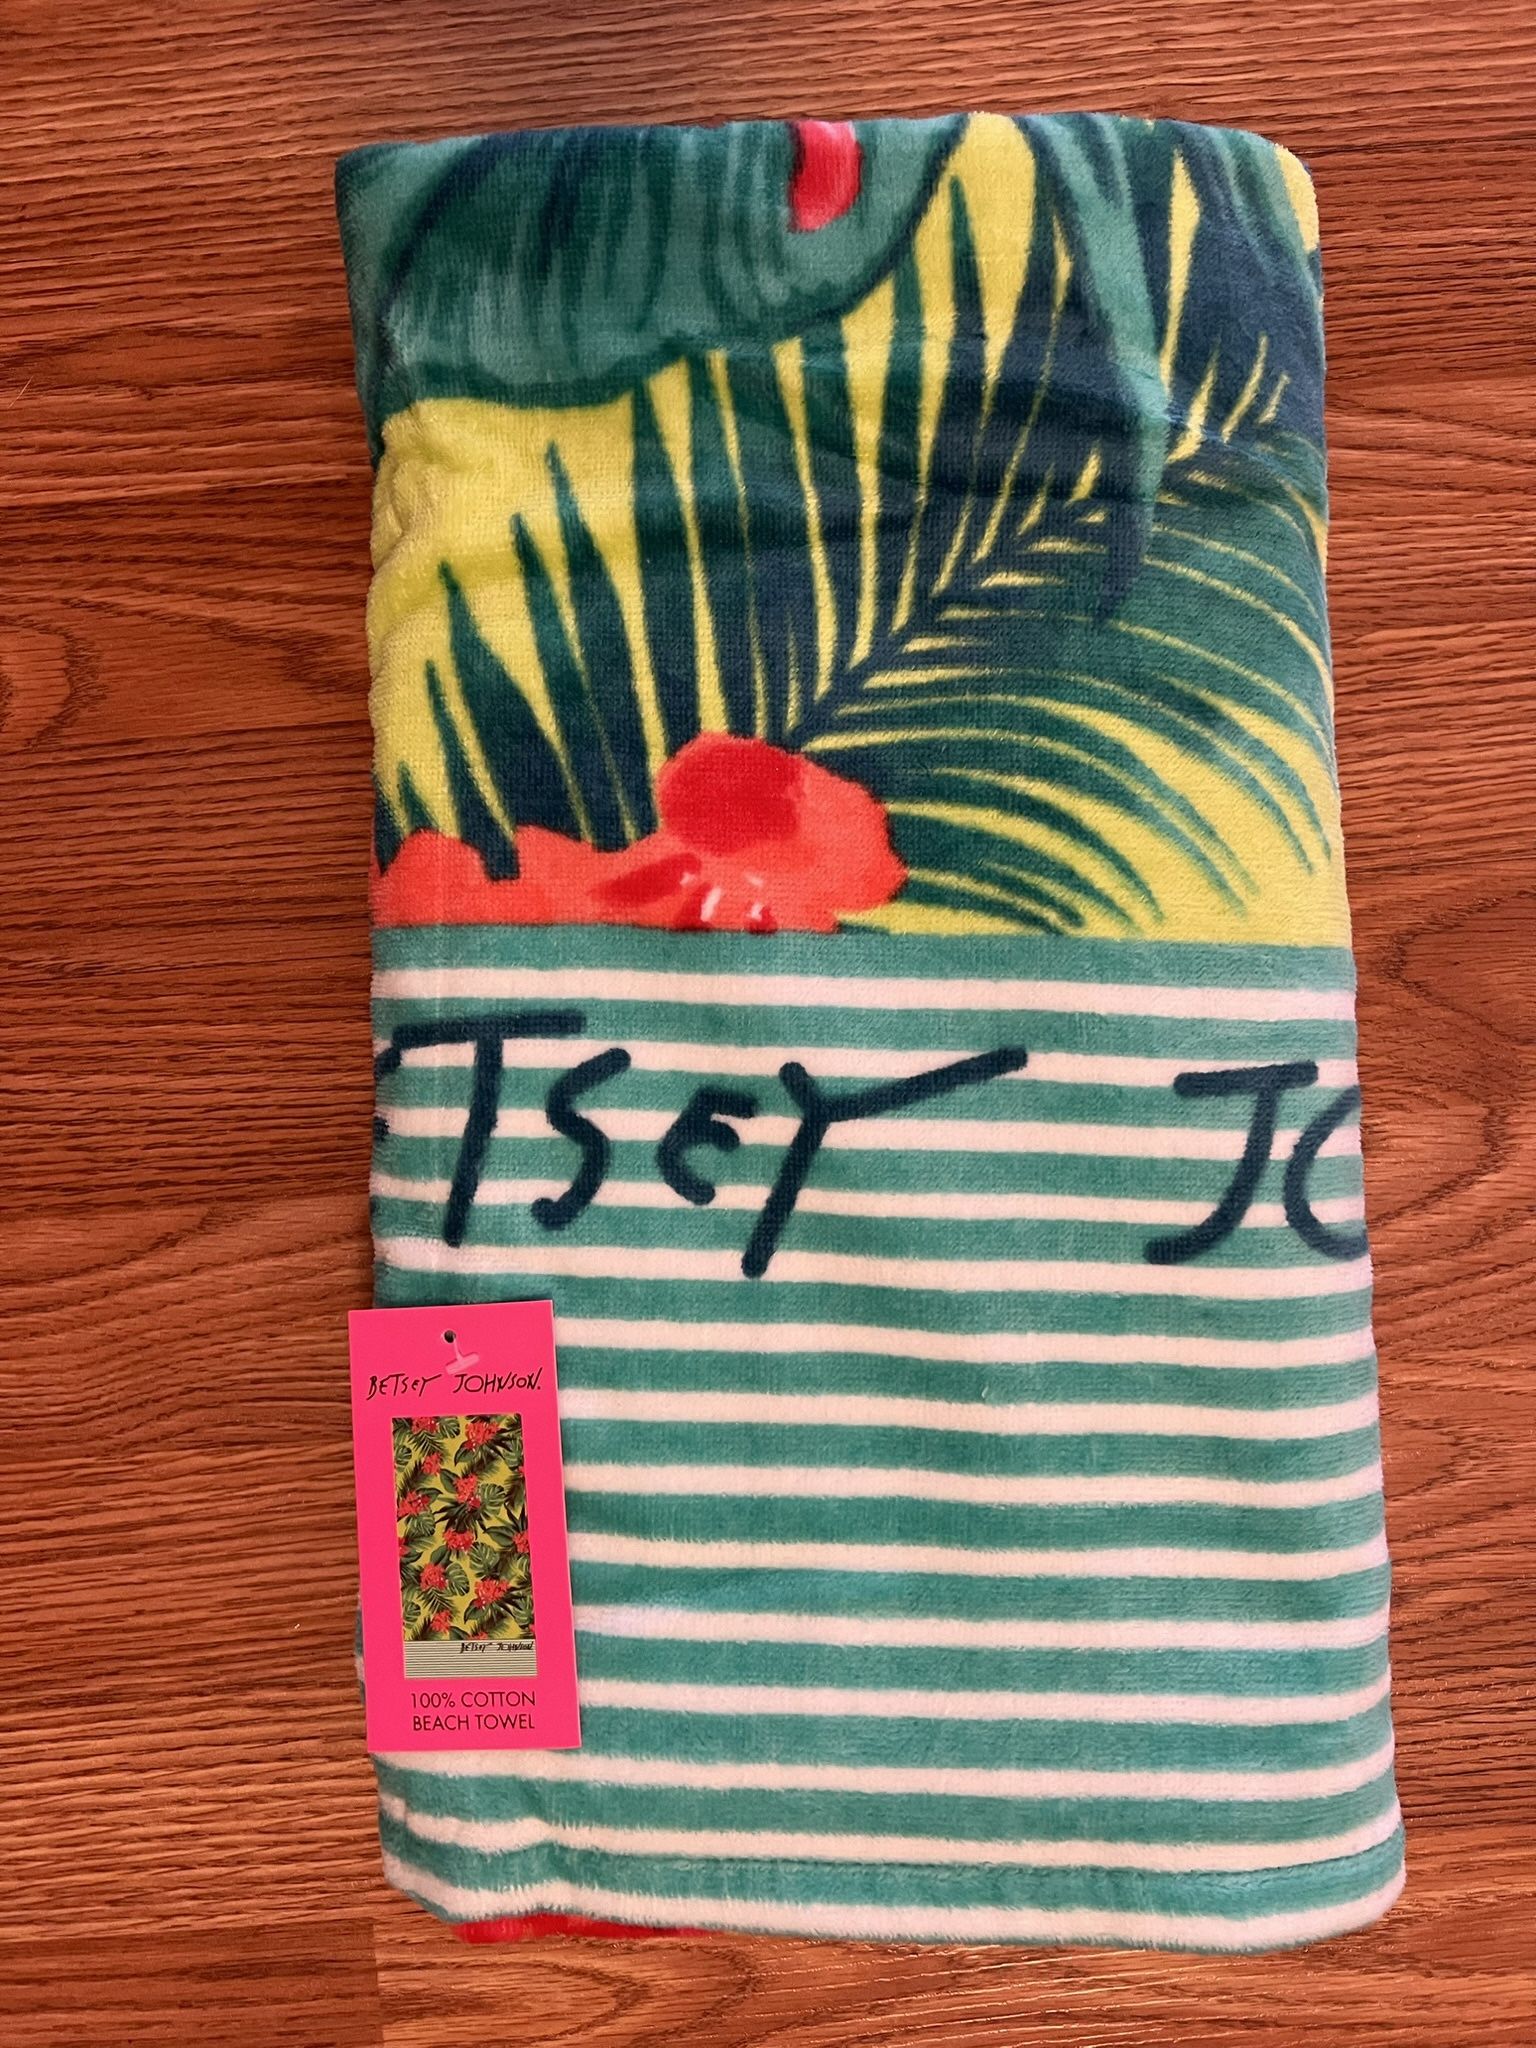 Betsy Johnson Large Beach Towel 